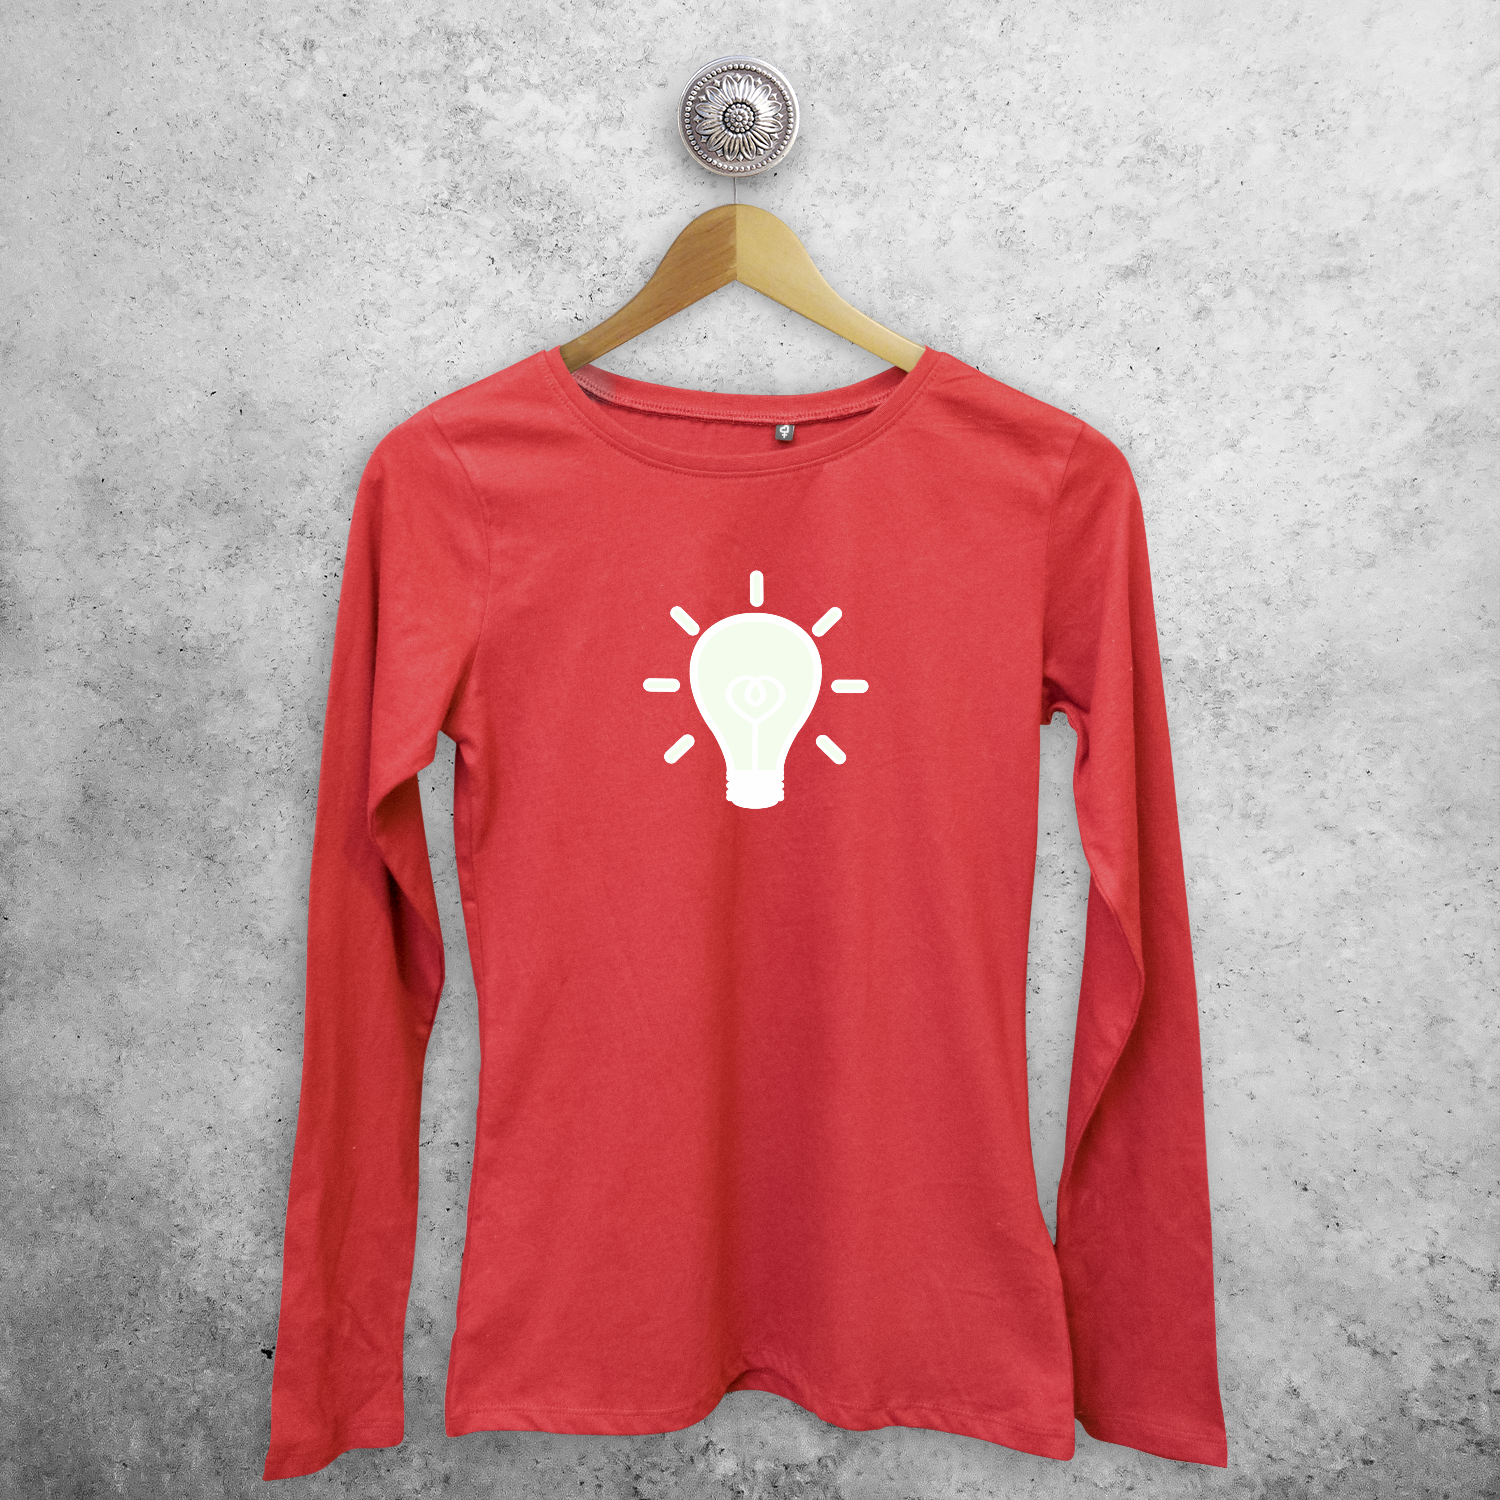 Light bulb glow in the dark adult longsleeve shirt